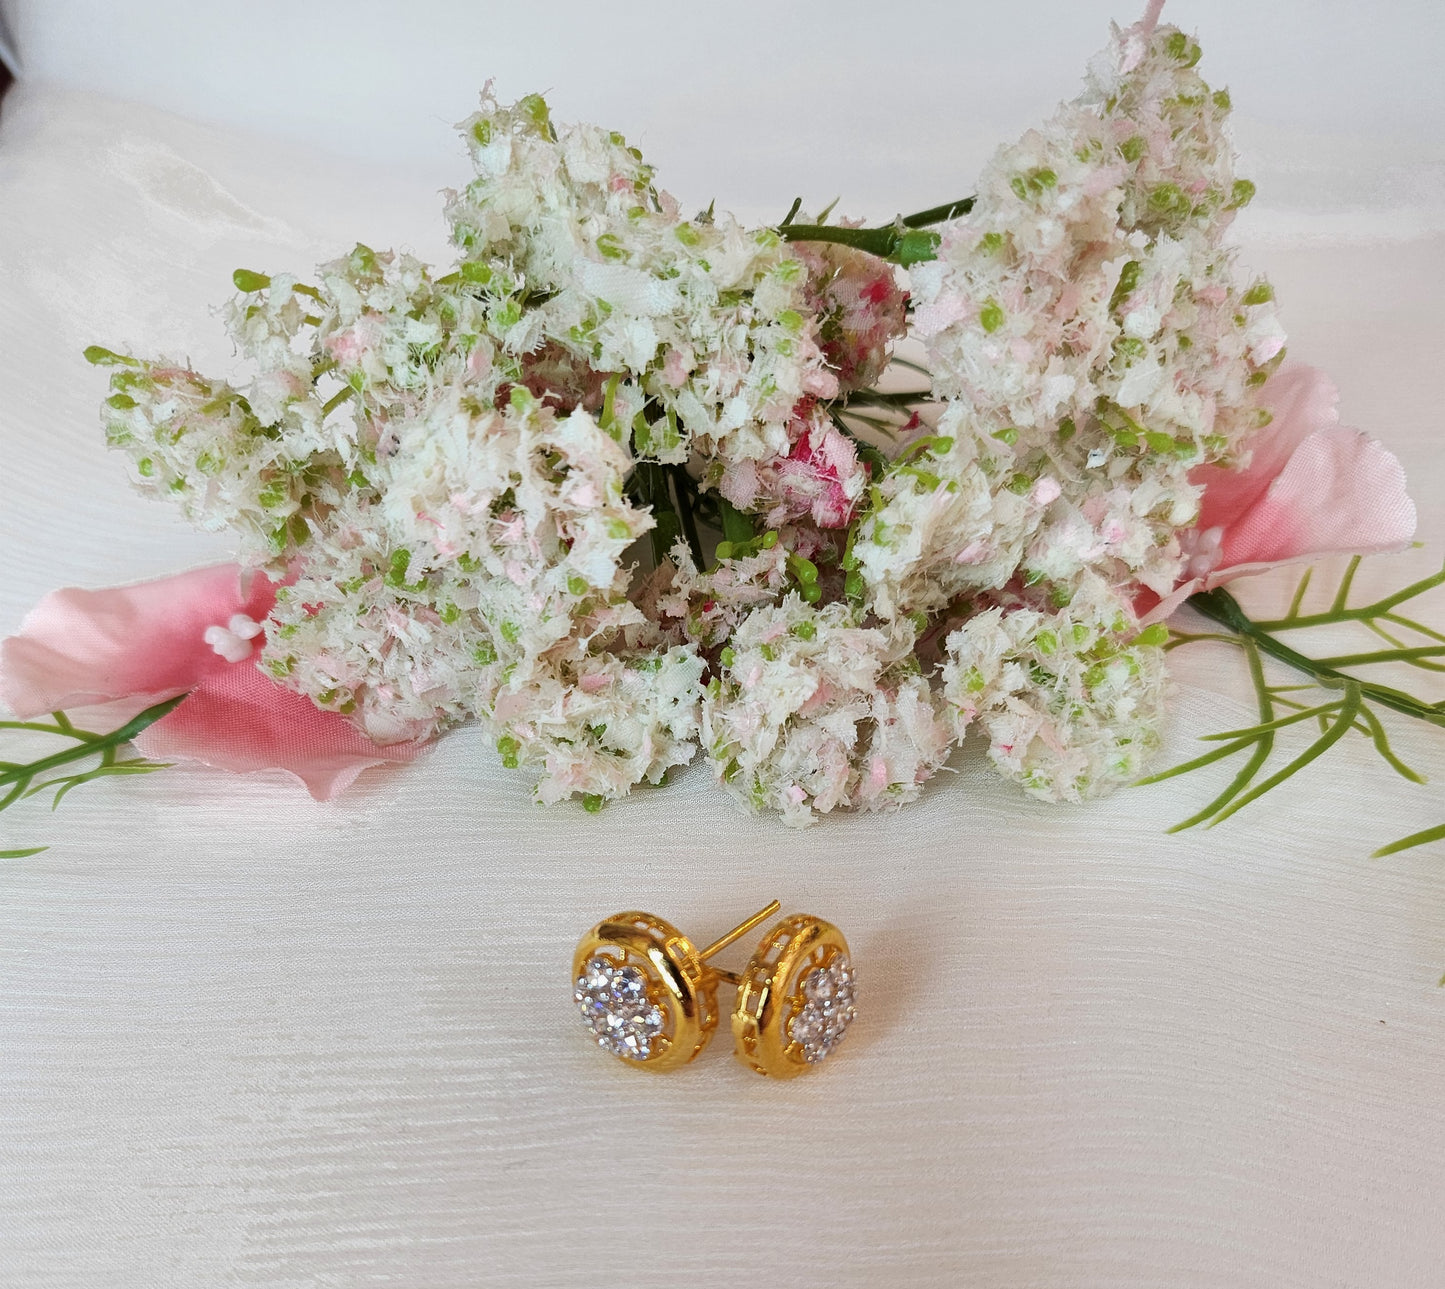 HAMSA JEWELRY - Small Round Gold with Flower diamond